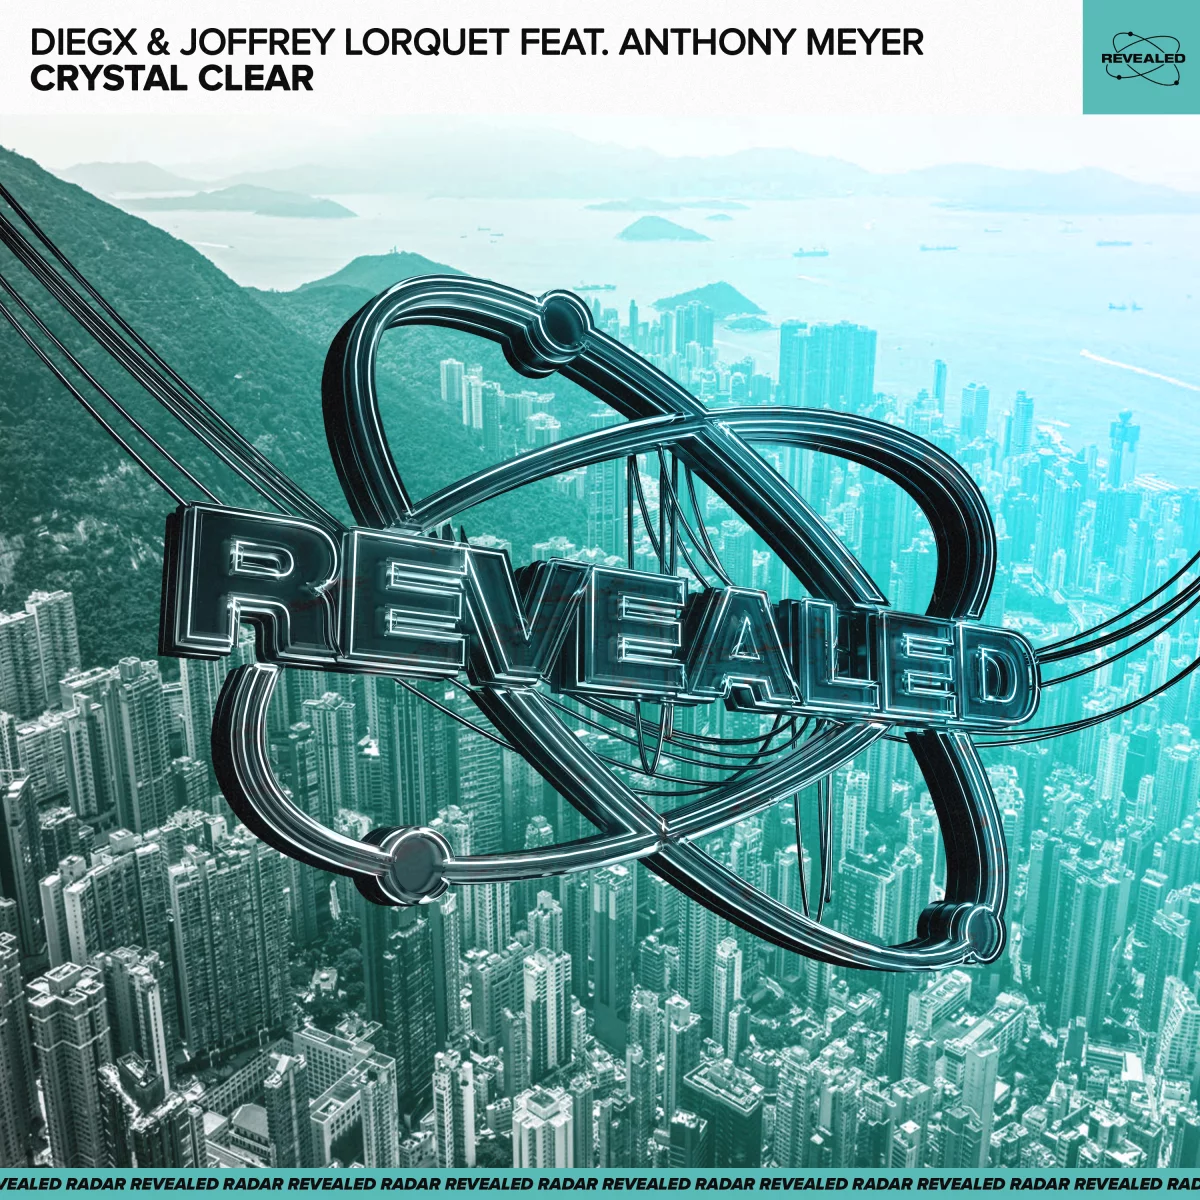 Crystal Clear - Diegx Music⁠ & Joffrey Lorquet⁠ feat. Anthony Meyer⁠